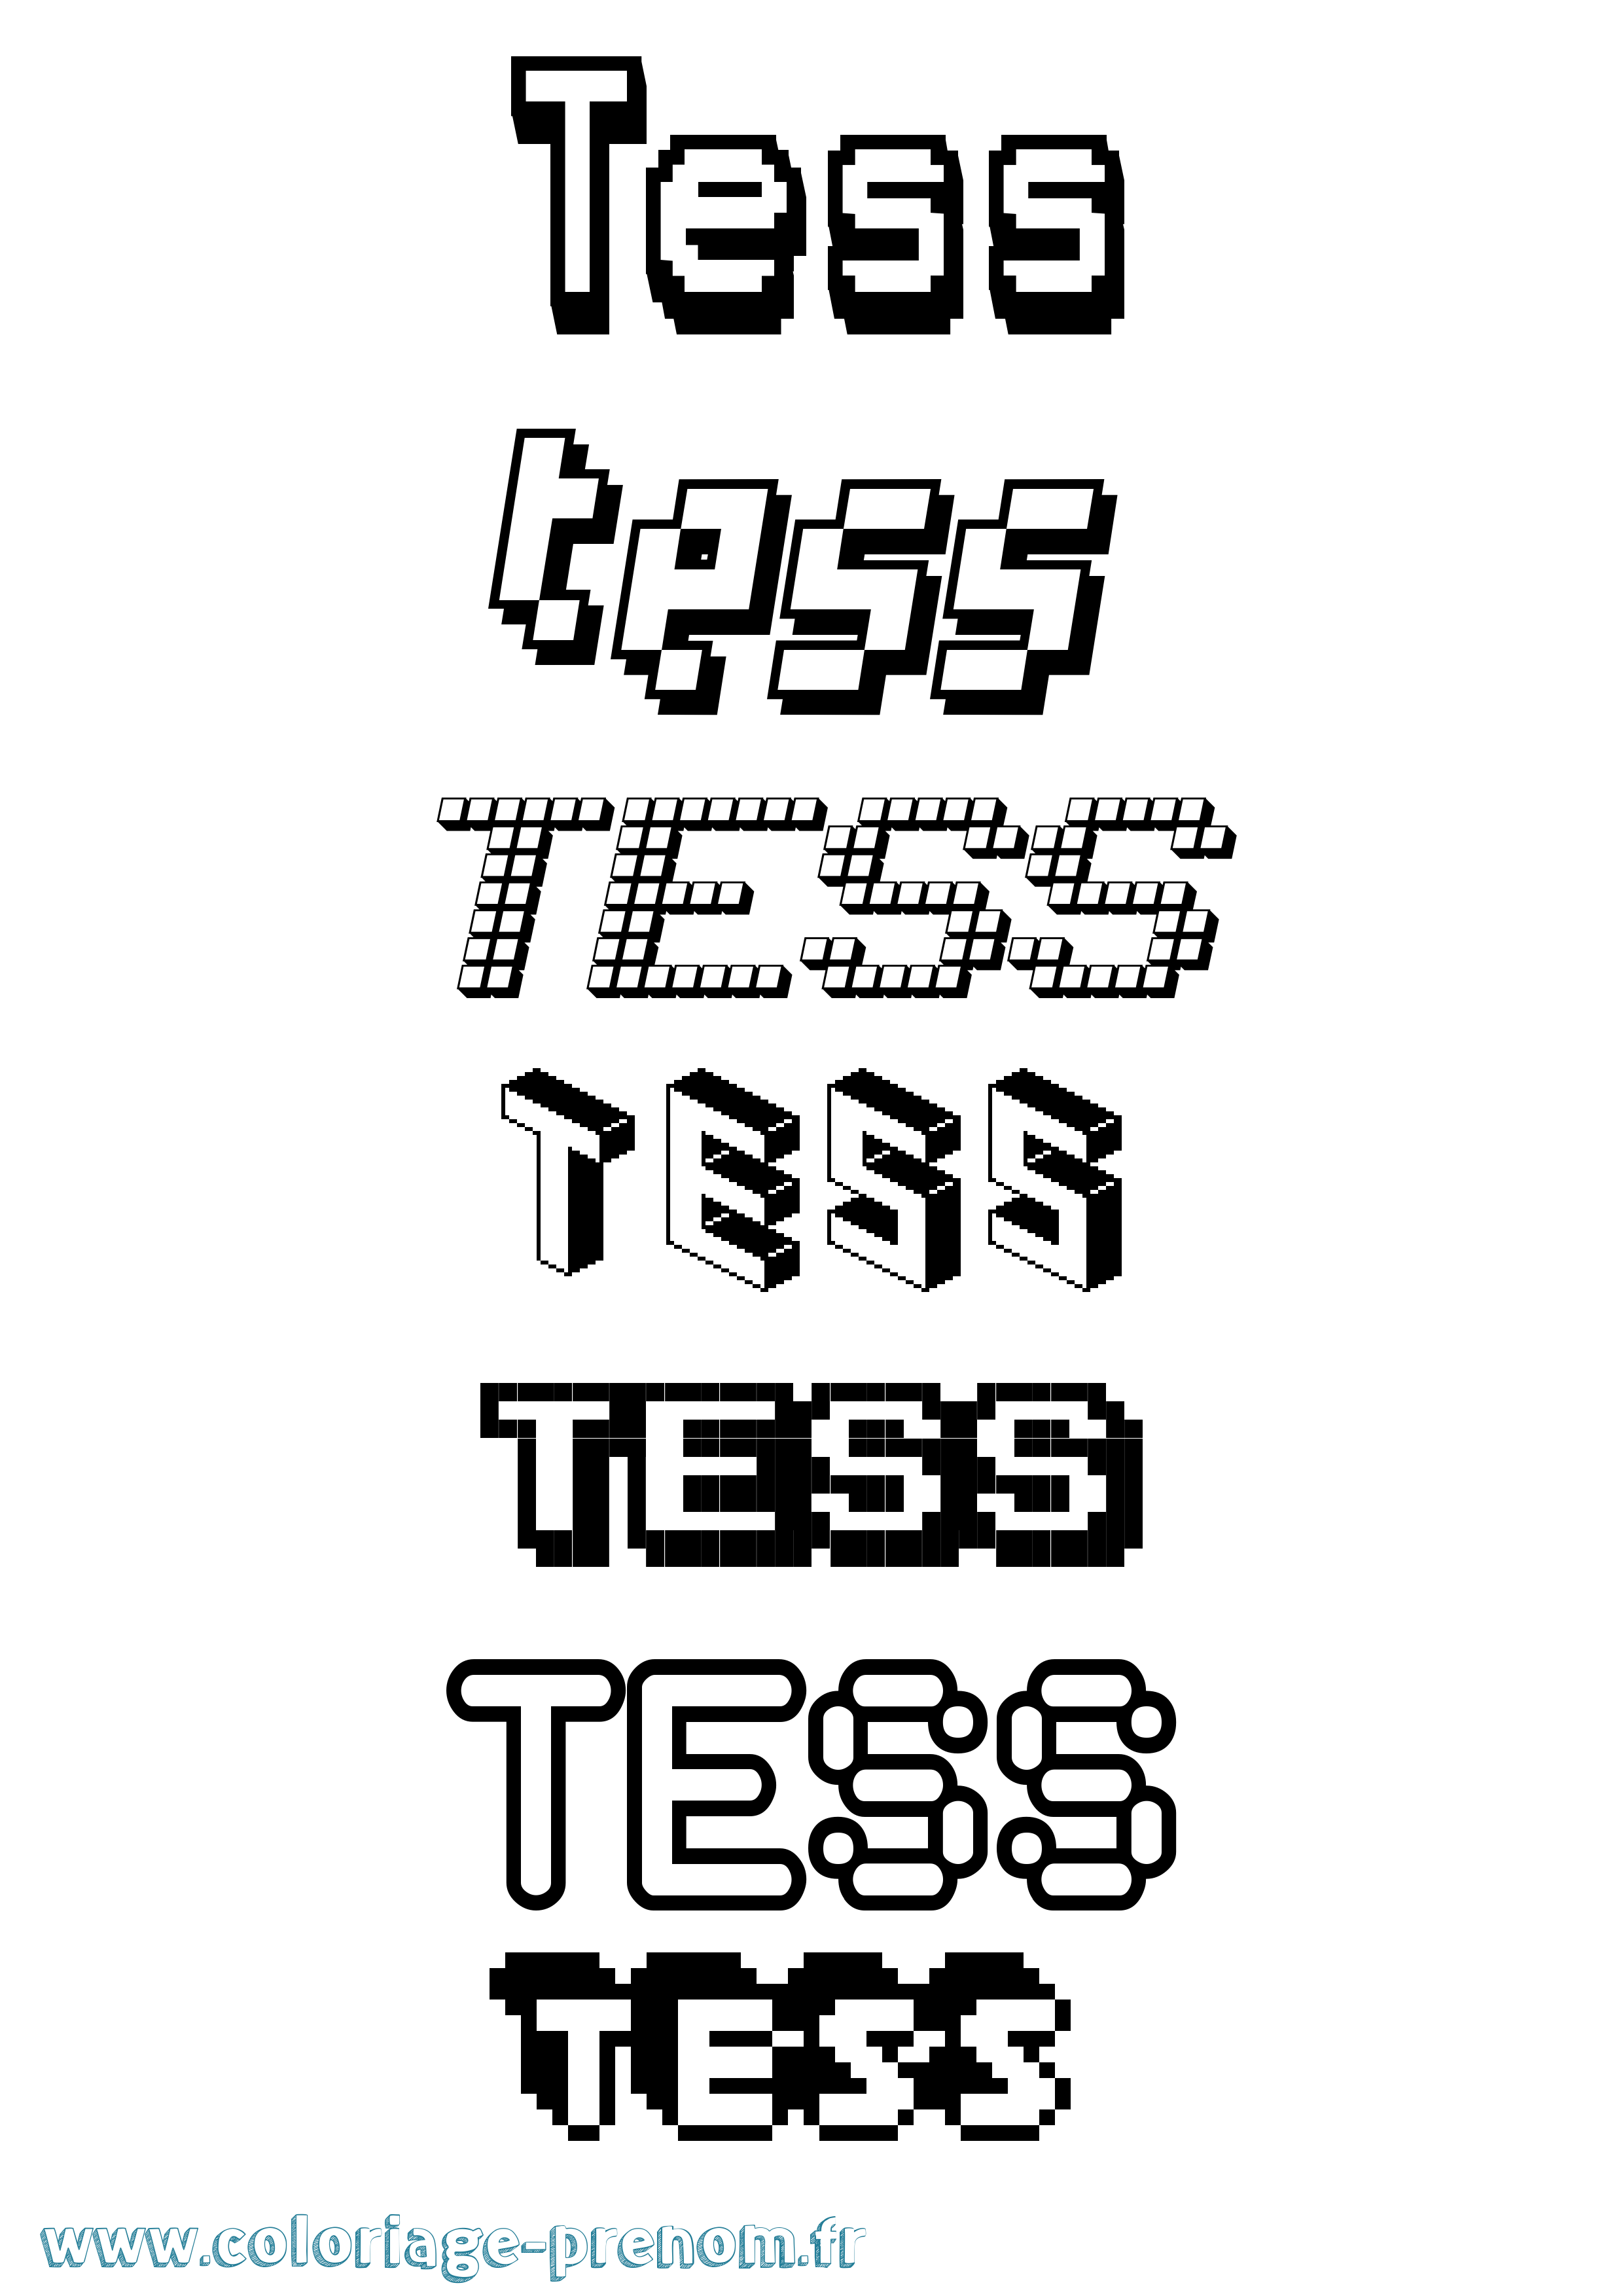 Coloriage prénom Tess Pixel